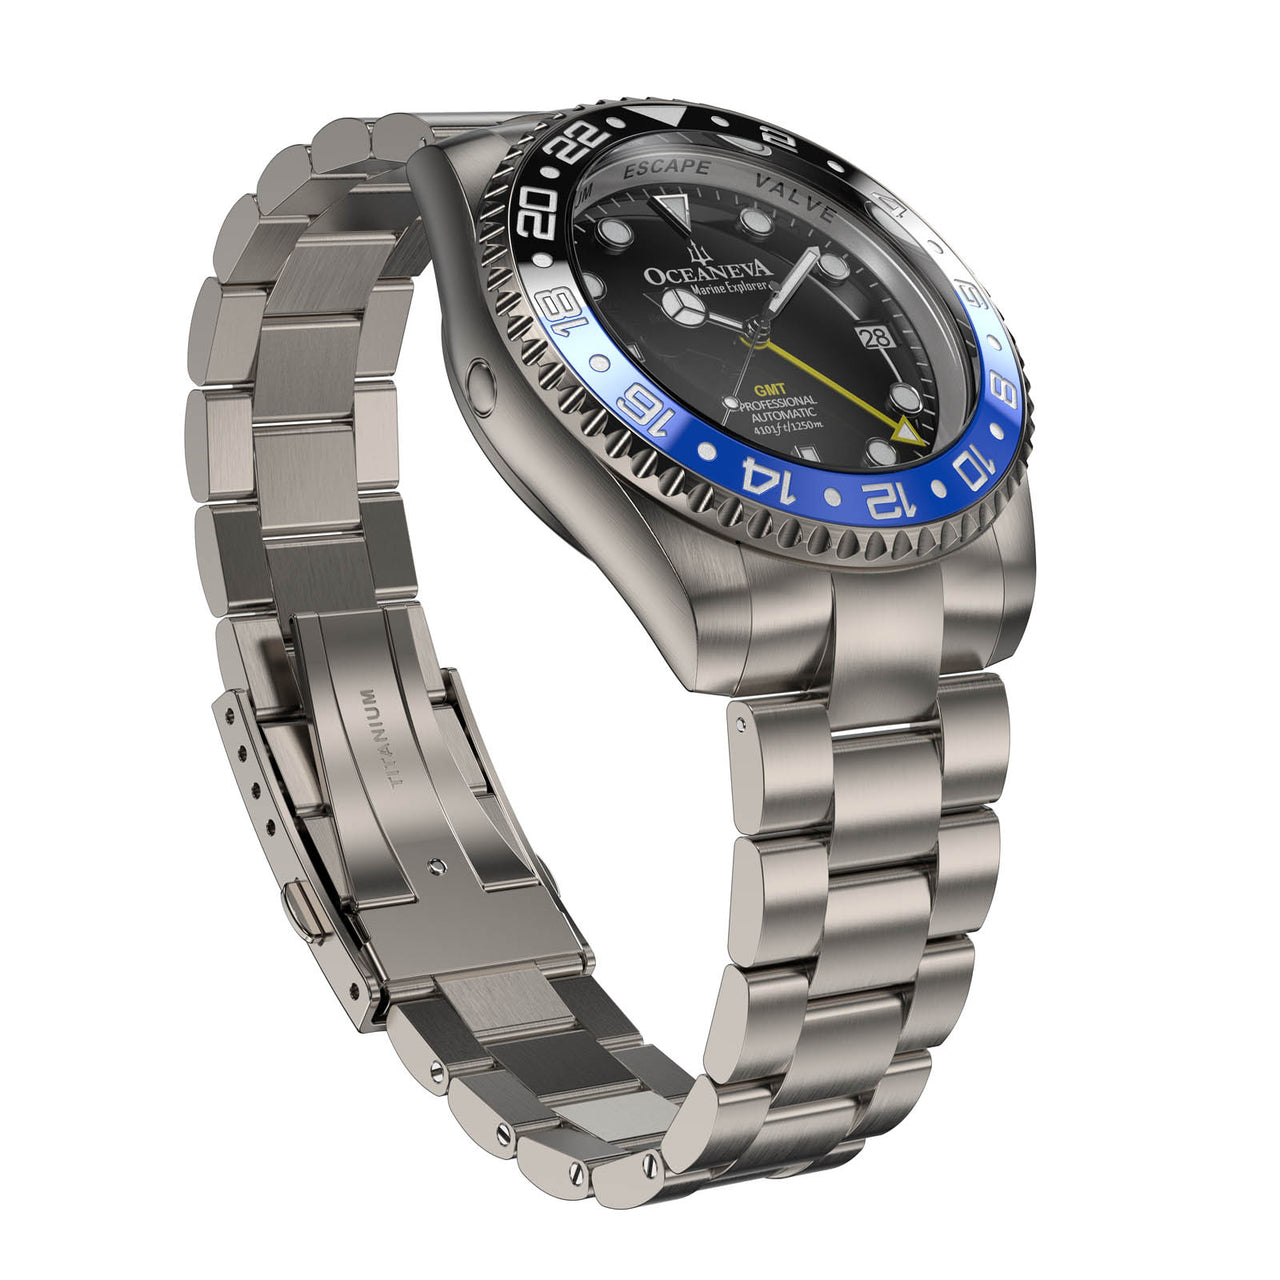 41 Hour Power Reserve capability of Oceaneva Titanium GMT Watch